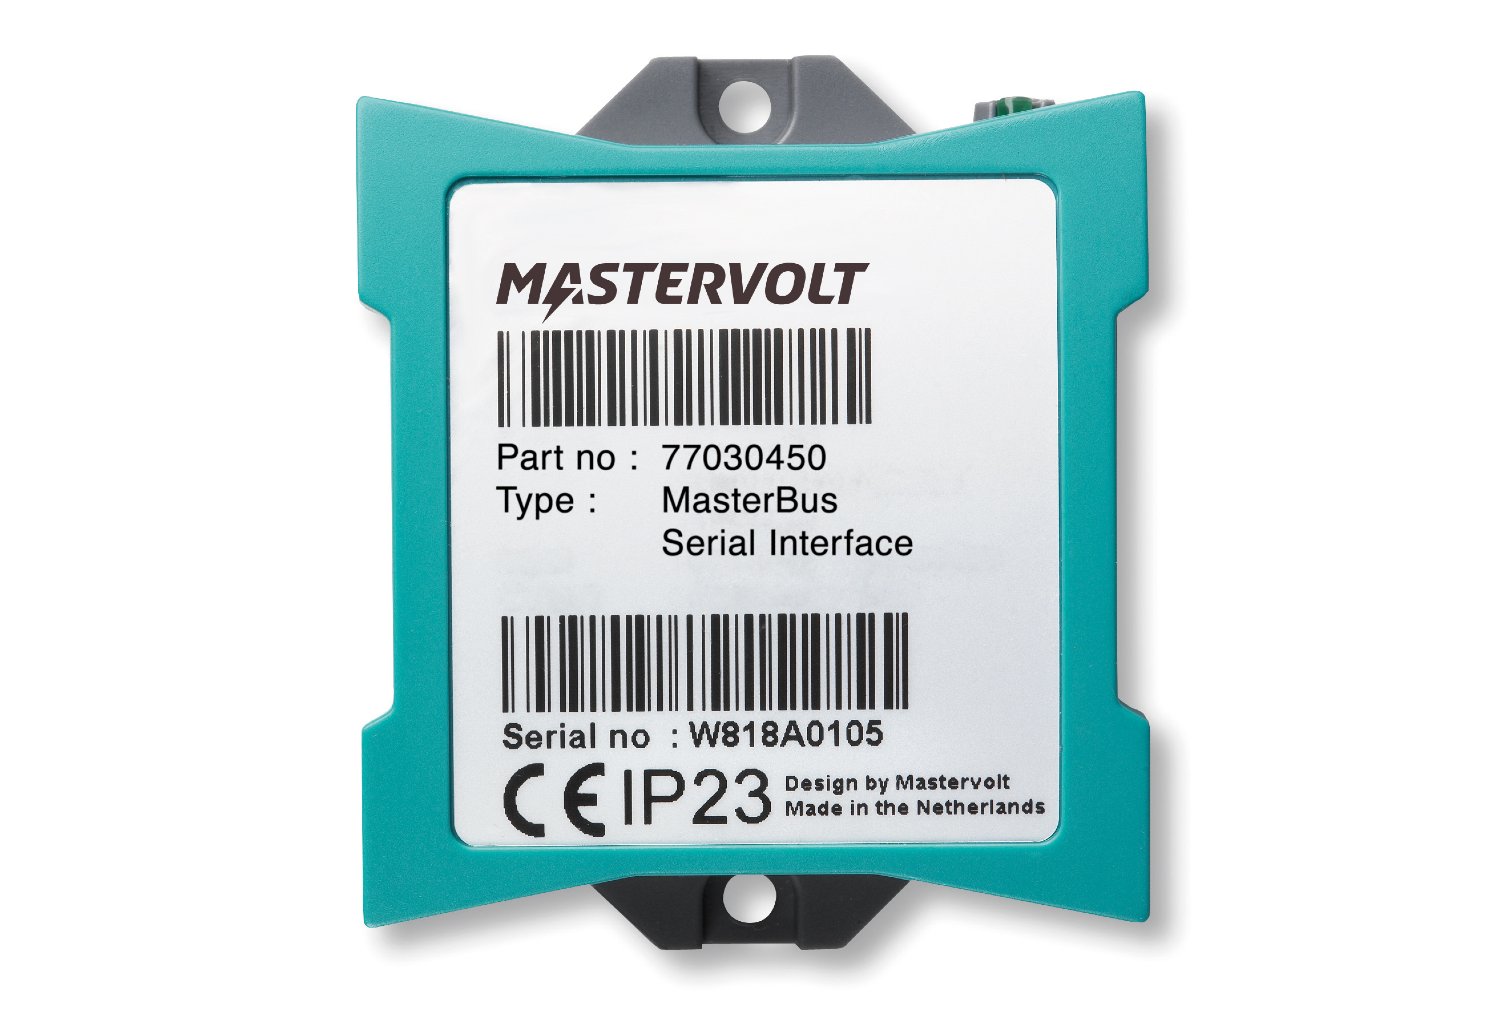 Mastervolt-MasterBus-Serial-Interface-front-Fischer-Panda